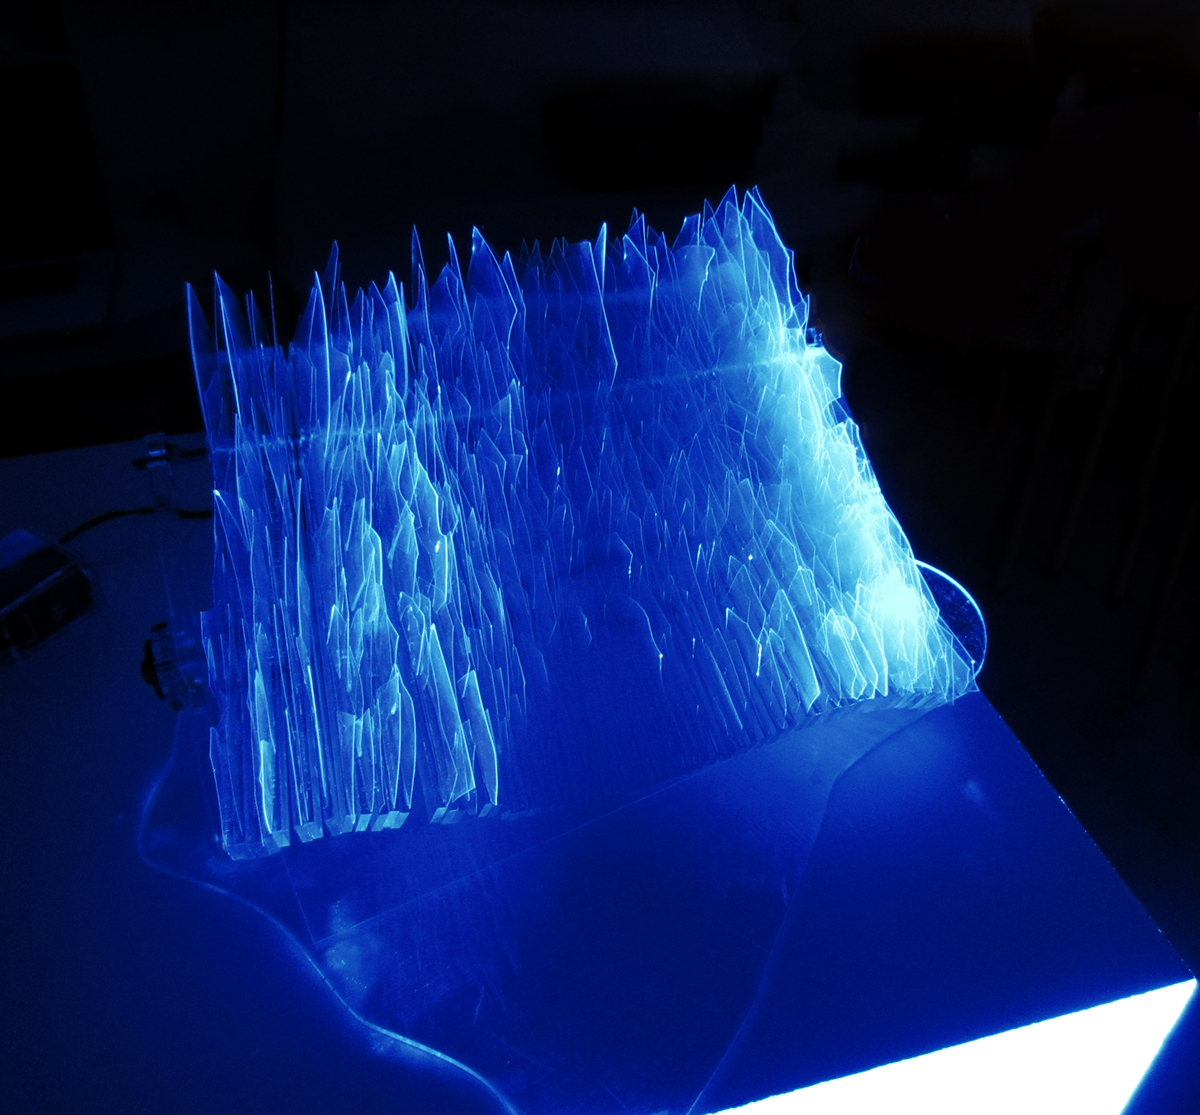 kinetic sculpture glass RCA ozgunkilic lidamarinkova pierrepaslier oluwaseyisosanya sosafresh projection light wave sine movement reflection